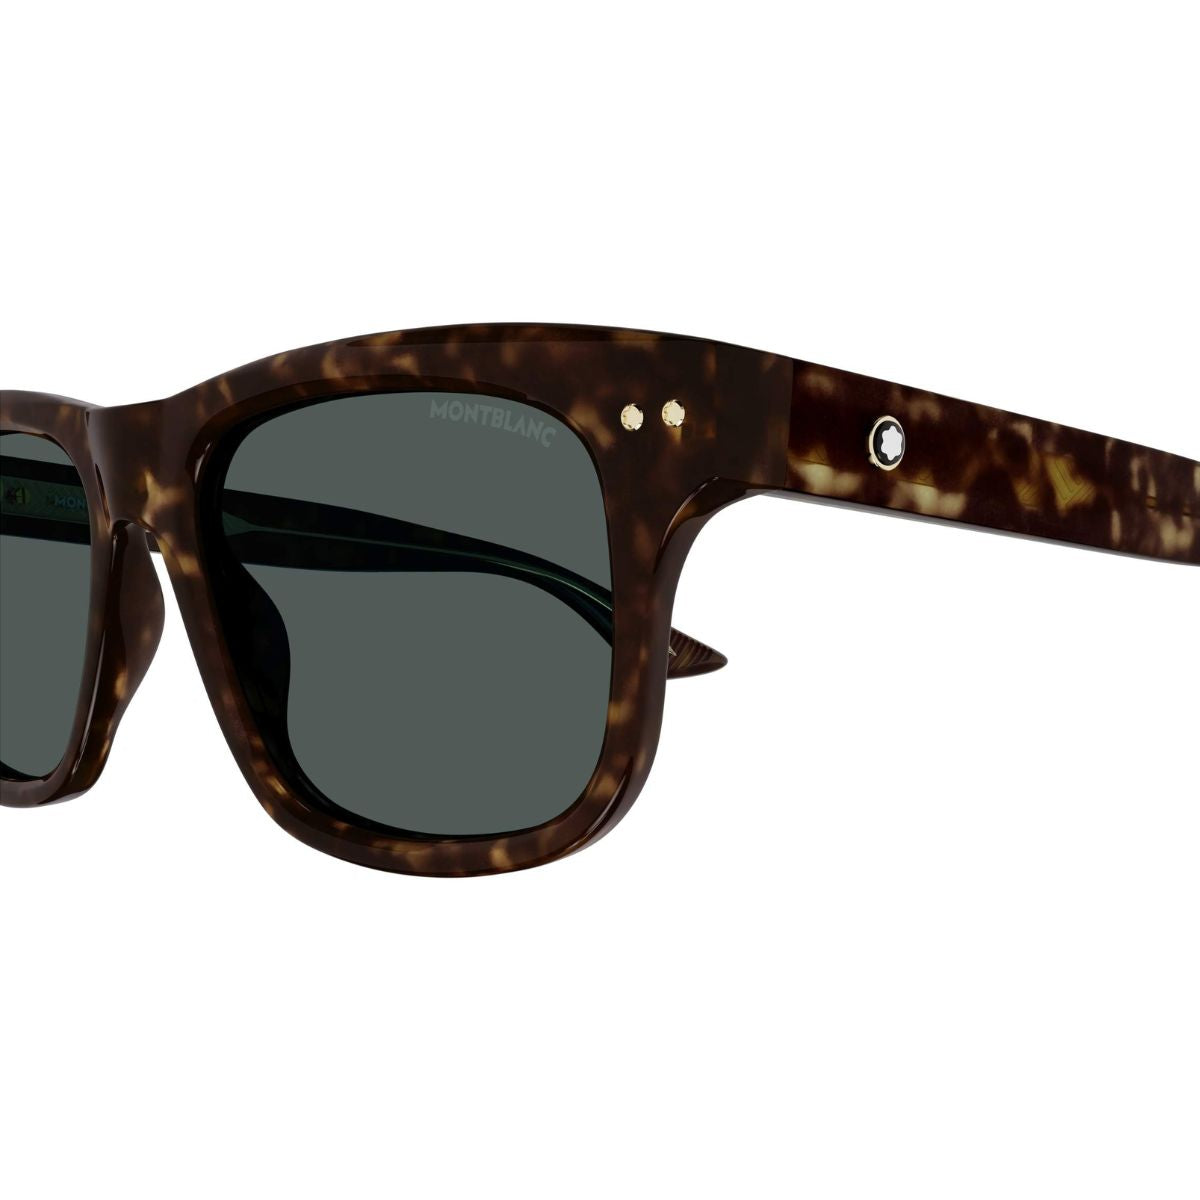 "Buy Stylish Mont Blanc Havana Square Sunglasses For Mens At Optorium"